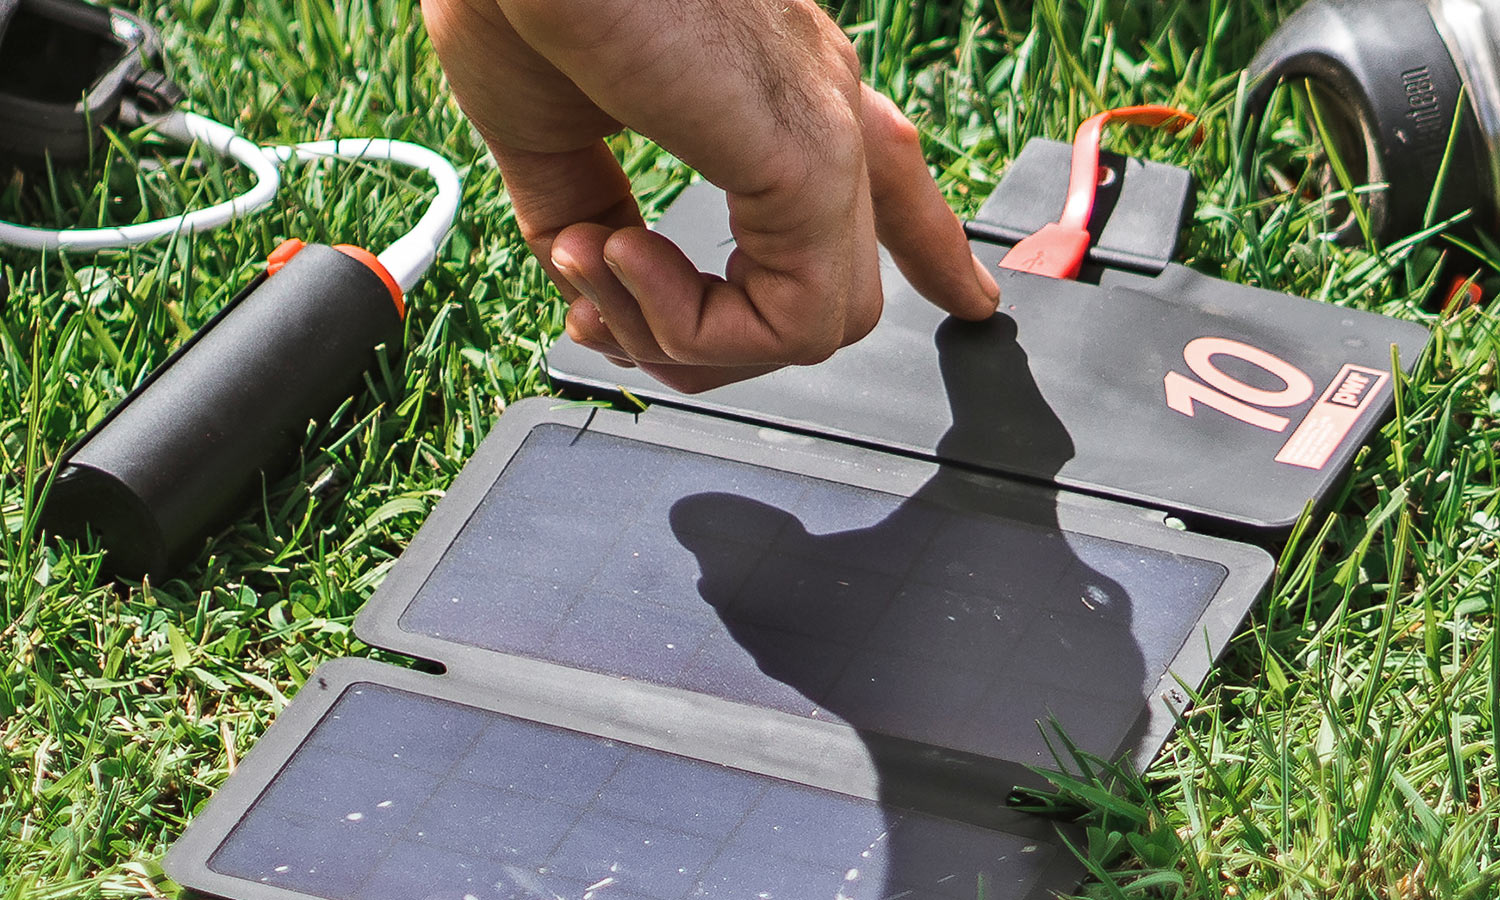 Knog PWR Solar 10W, folding compact photovoltaic panel bikepacking solar charger, LED indicators